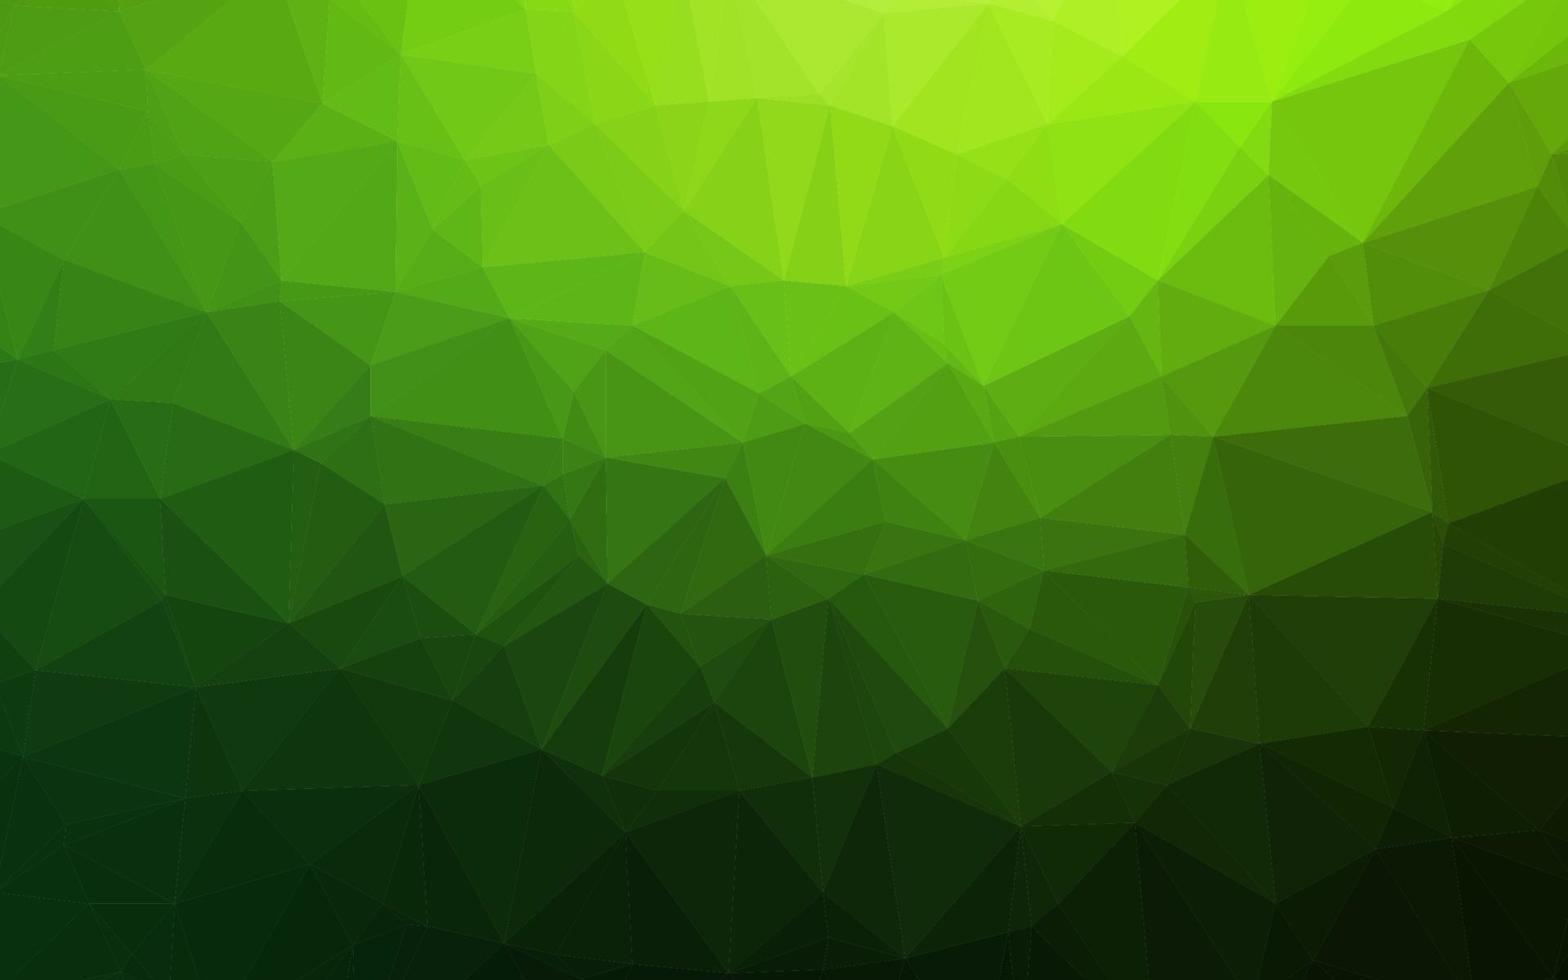 hellgrüner Vektor glänzender dreieckiger Hintergrund.